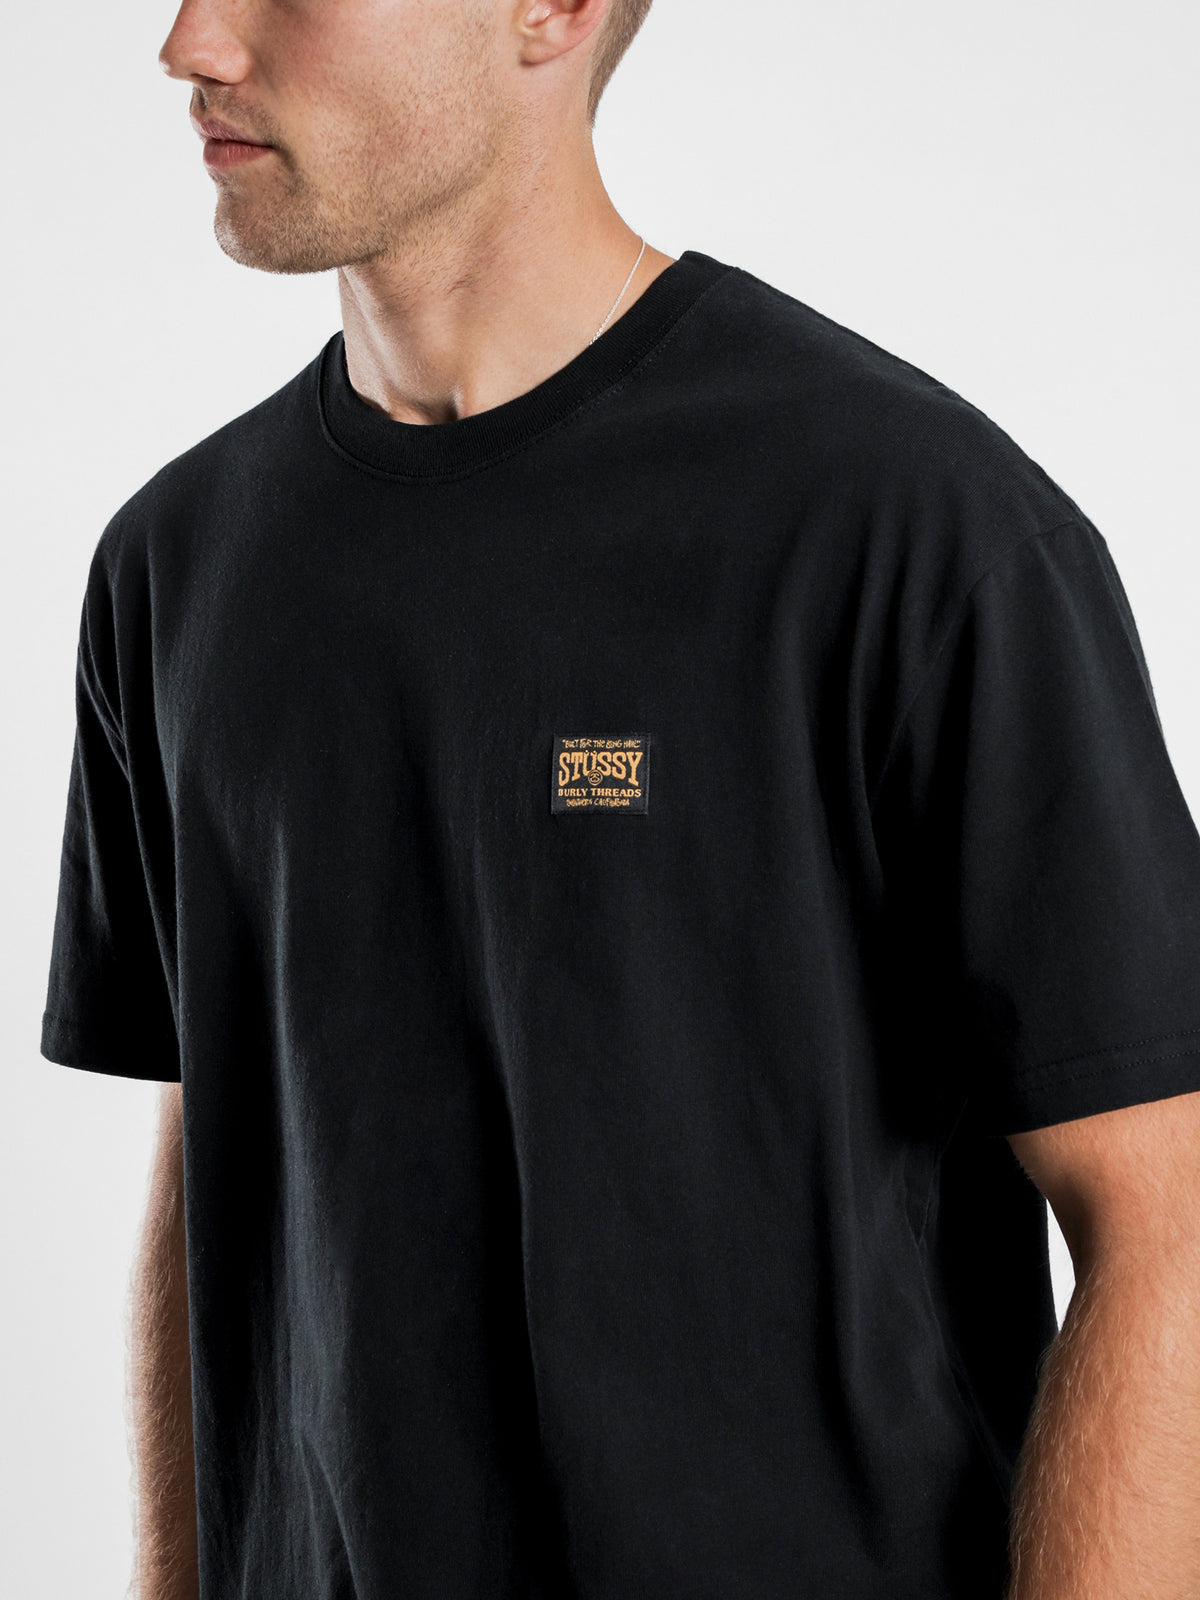 Long Haul Short Sleeve T-Shirt in Black